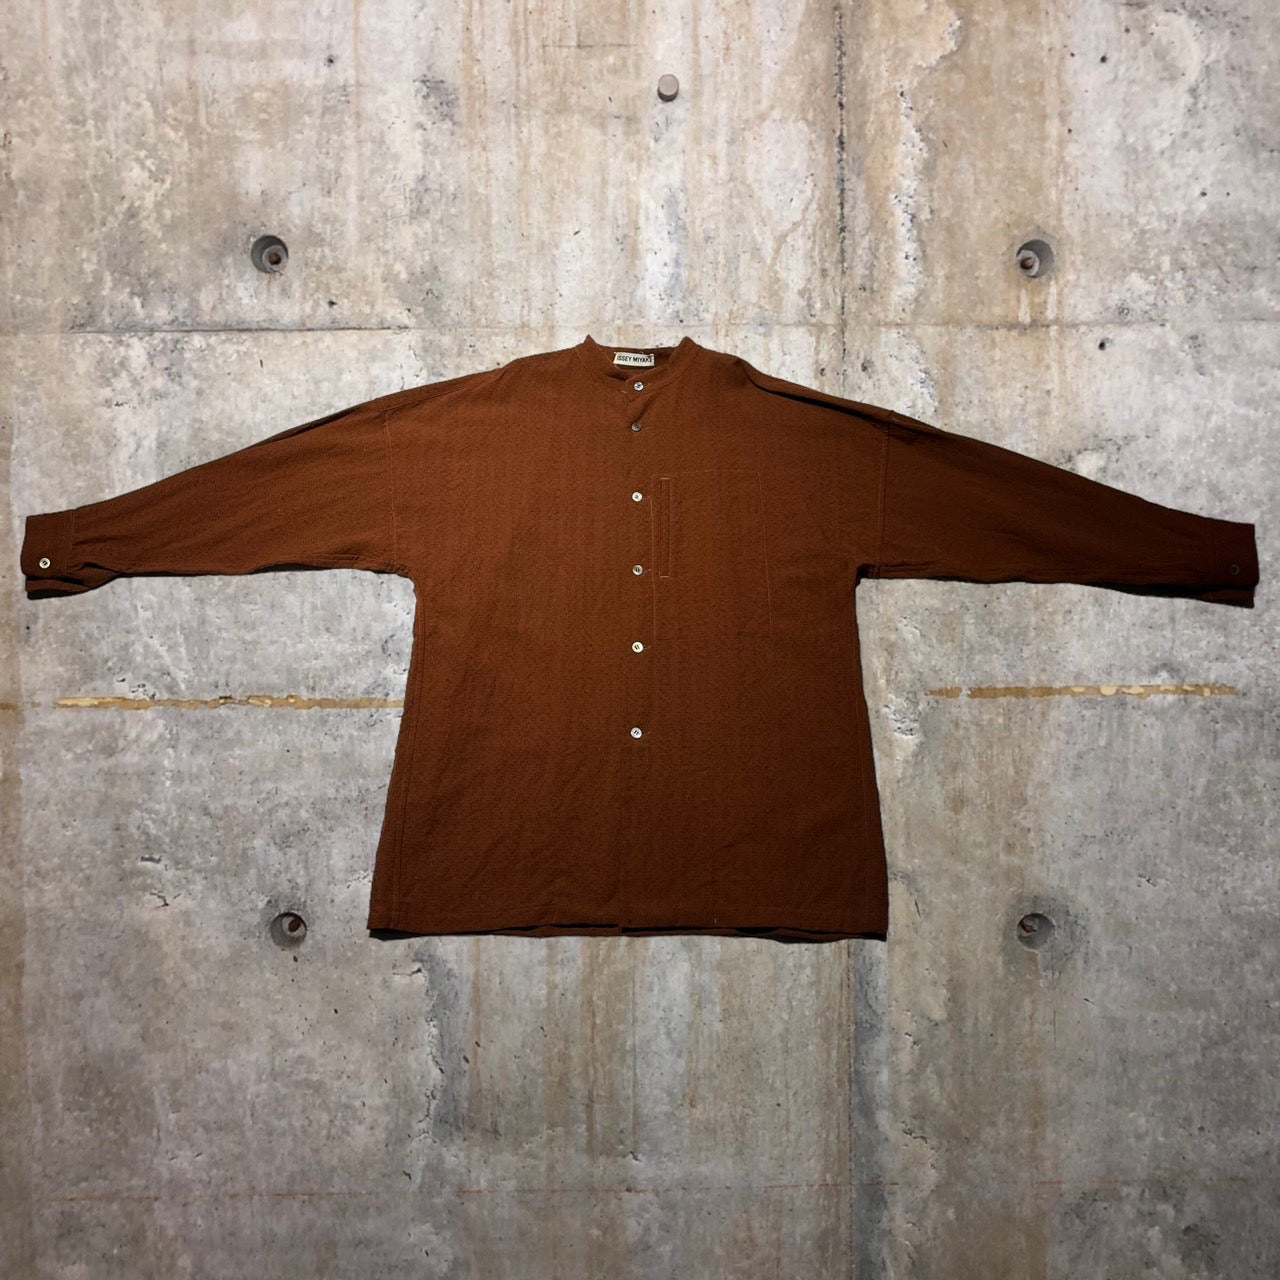 ISSEY MIYAKE(イッセイミヤケ) 90'sバンドカラービッグシャツ 表記なし(L程度) ブラウン